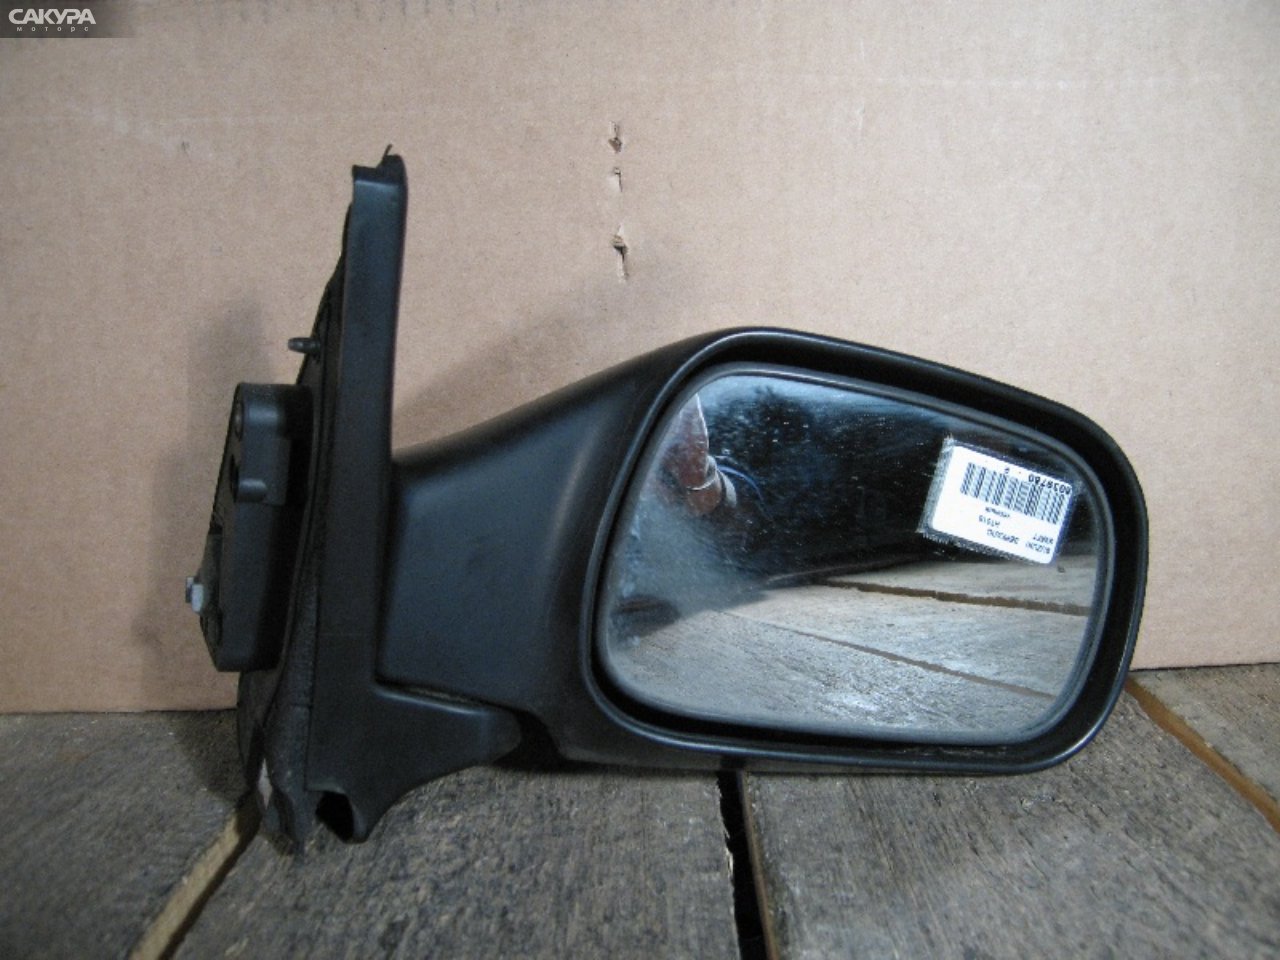 Зеркало боковое правое Suzuki Swift HT51S: купить в Сакура Абакан.